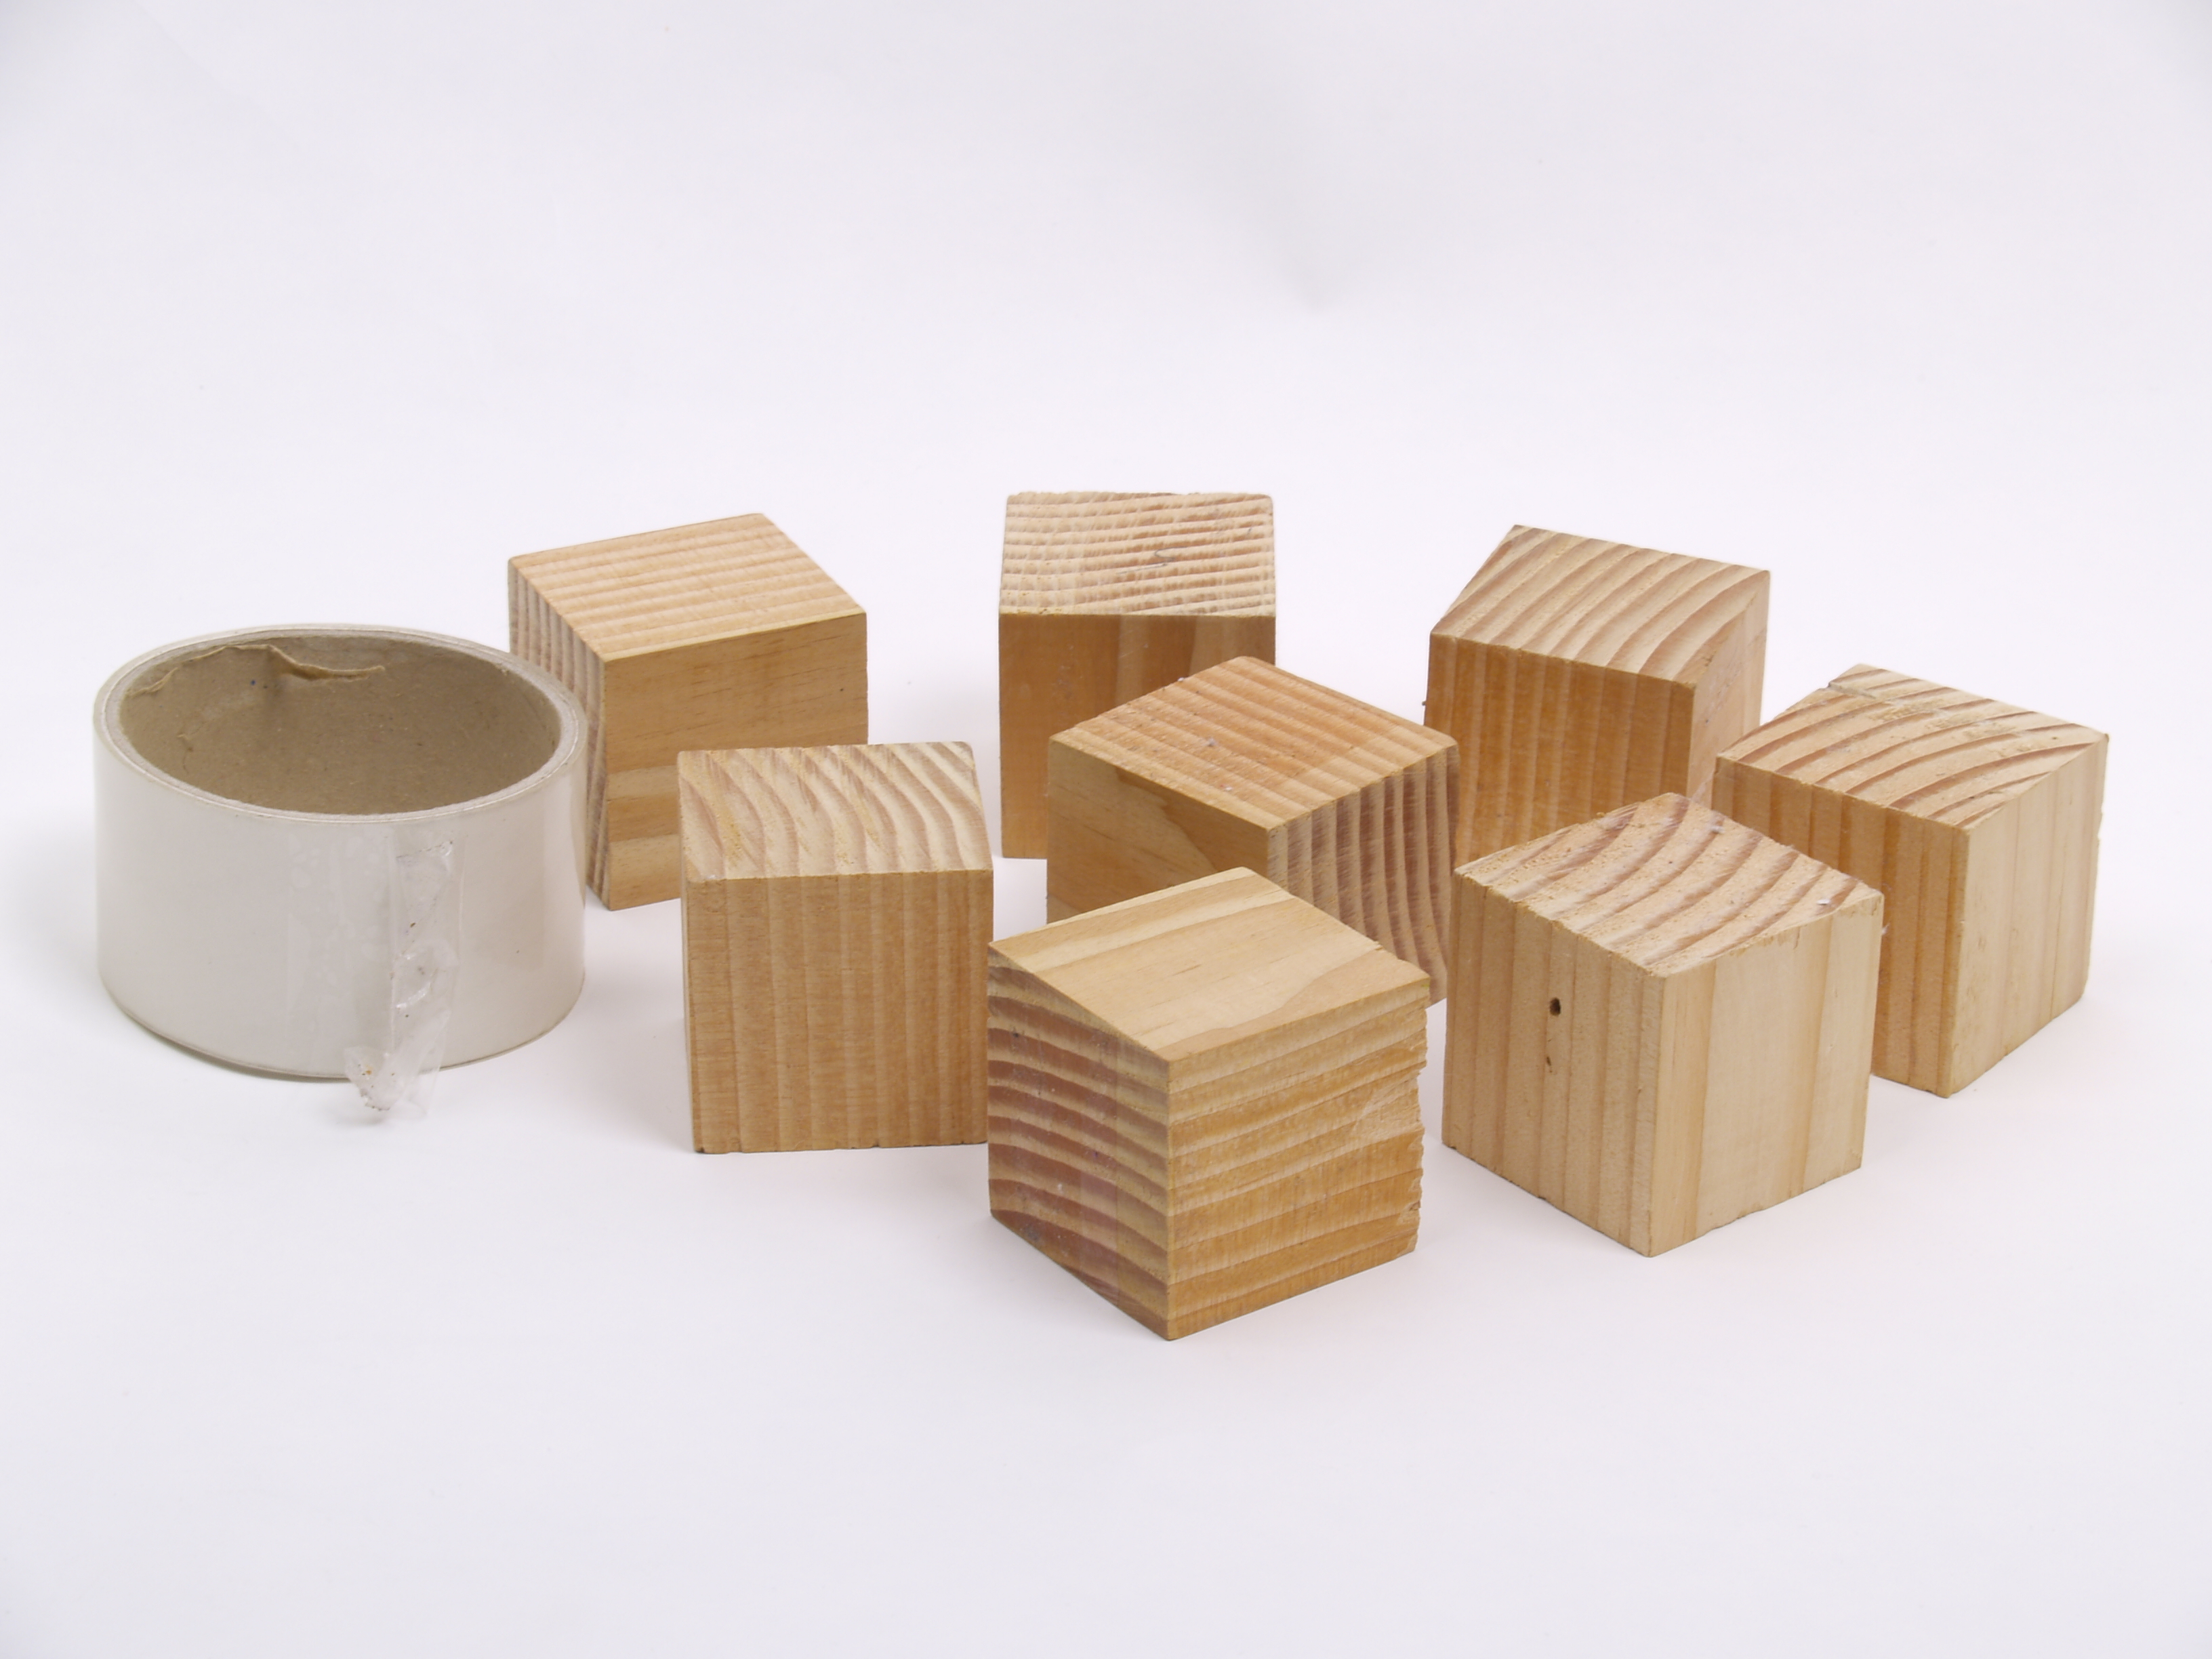 Making cubes. Деревянный куб Монтессори для детей. Коробка кубиков деревянных. Деревянный куб для еды. Wooden Cube.